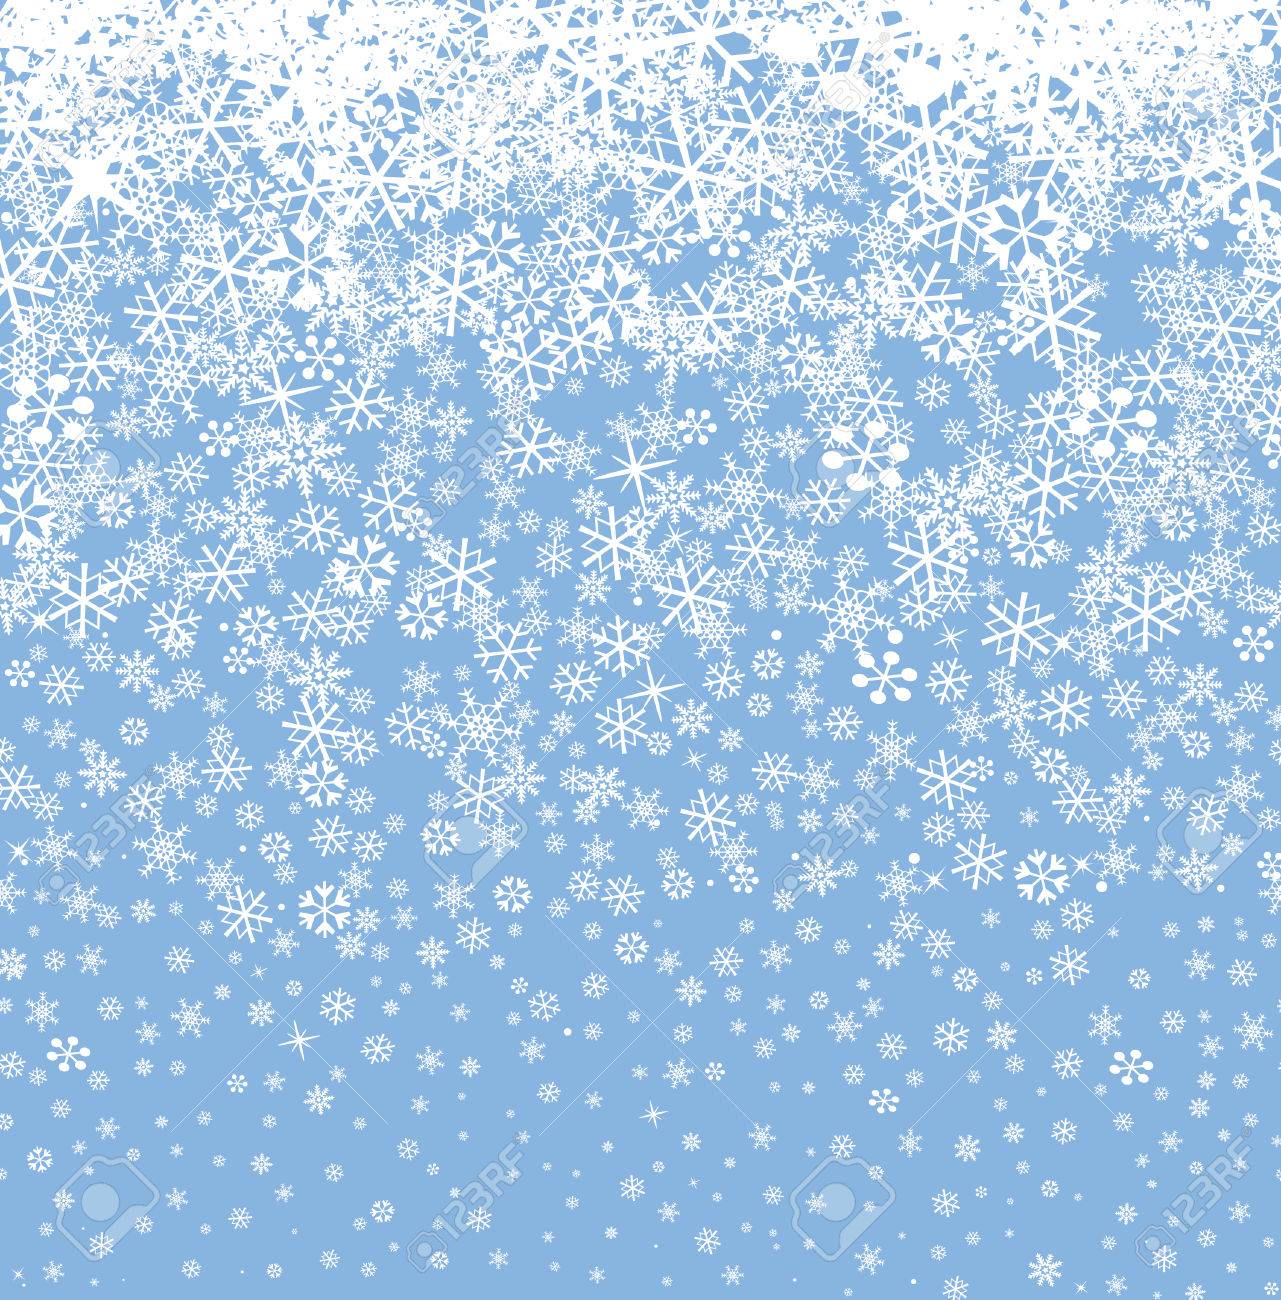 Snow Background Snowflakes Seamless Pattern Winter Snowy